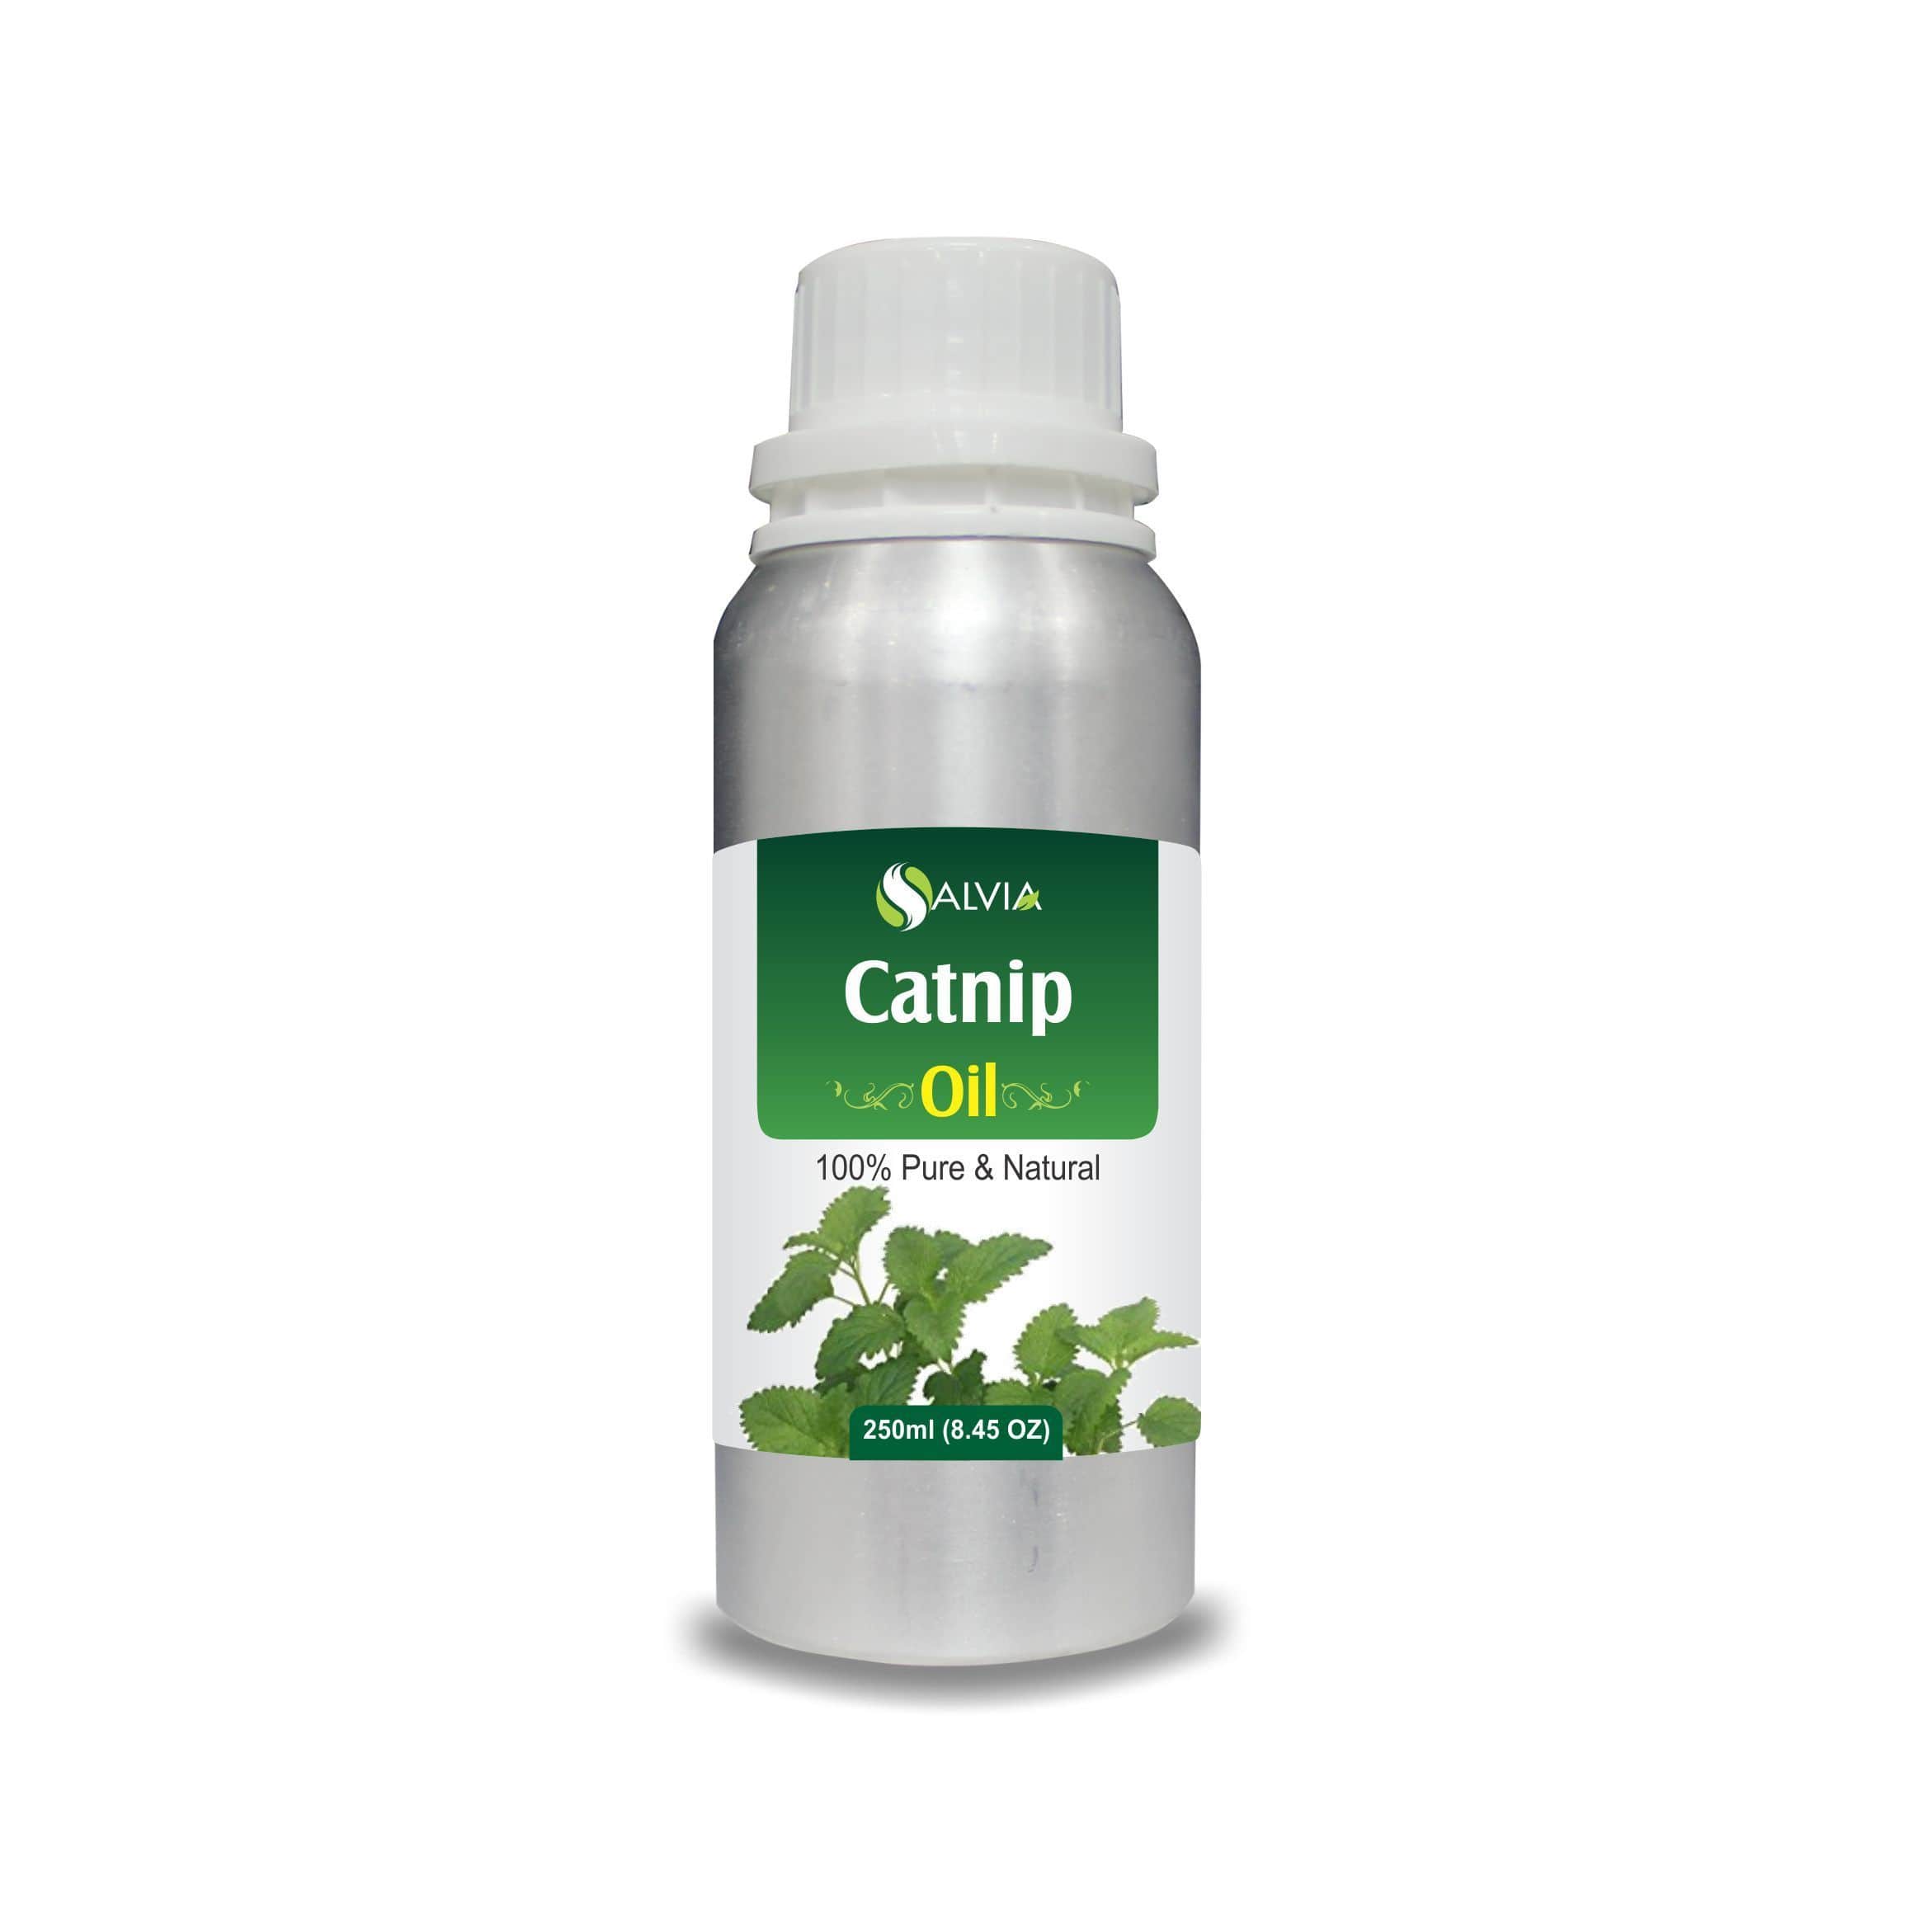 Catnip Oil price